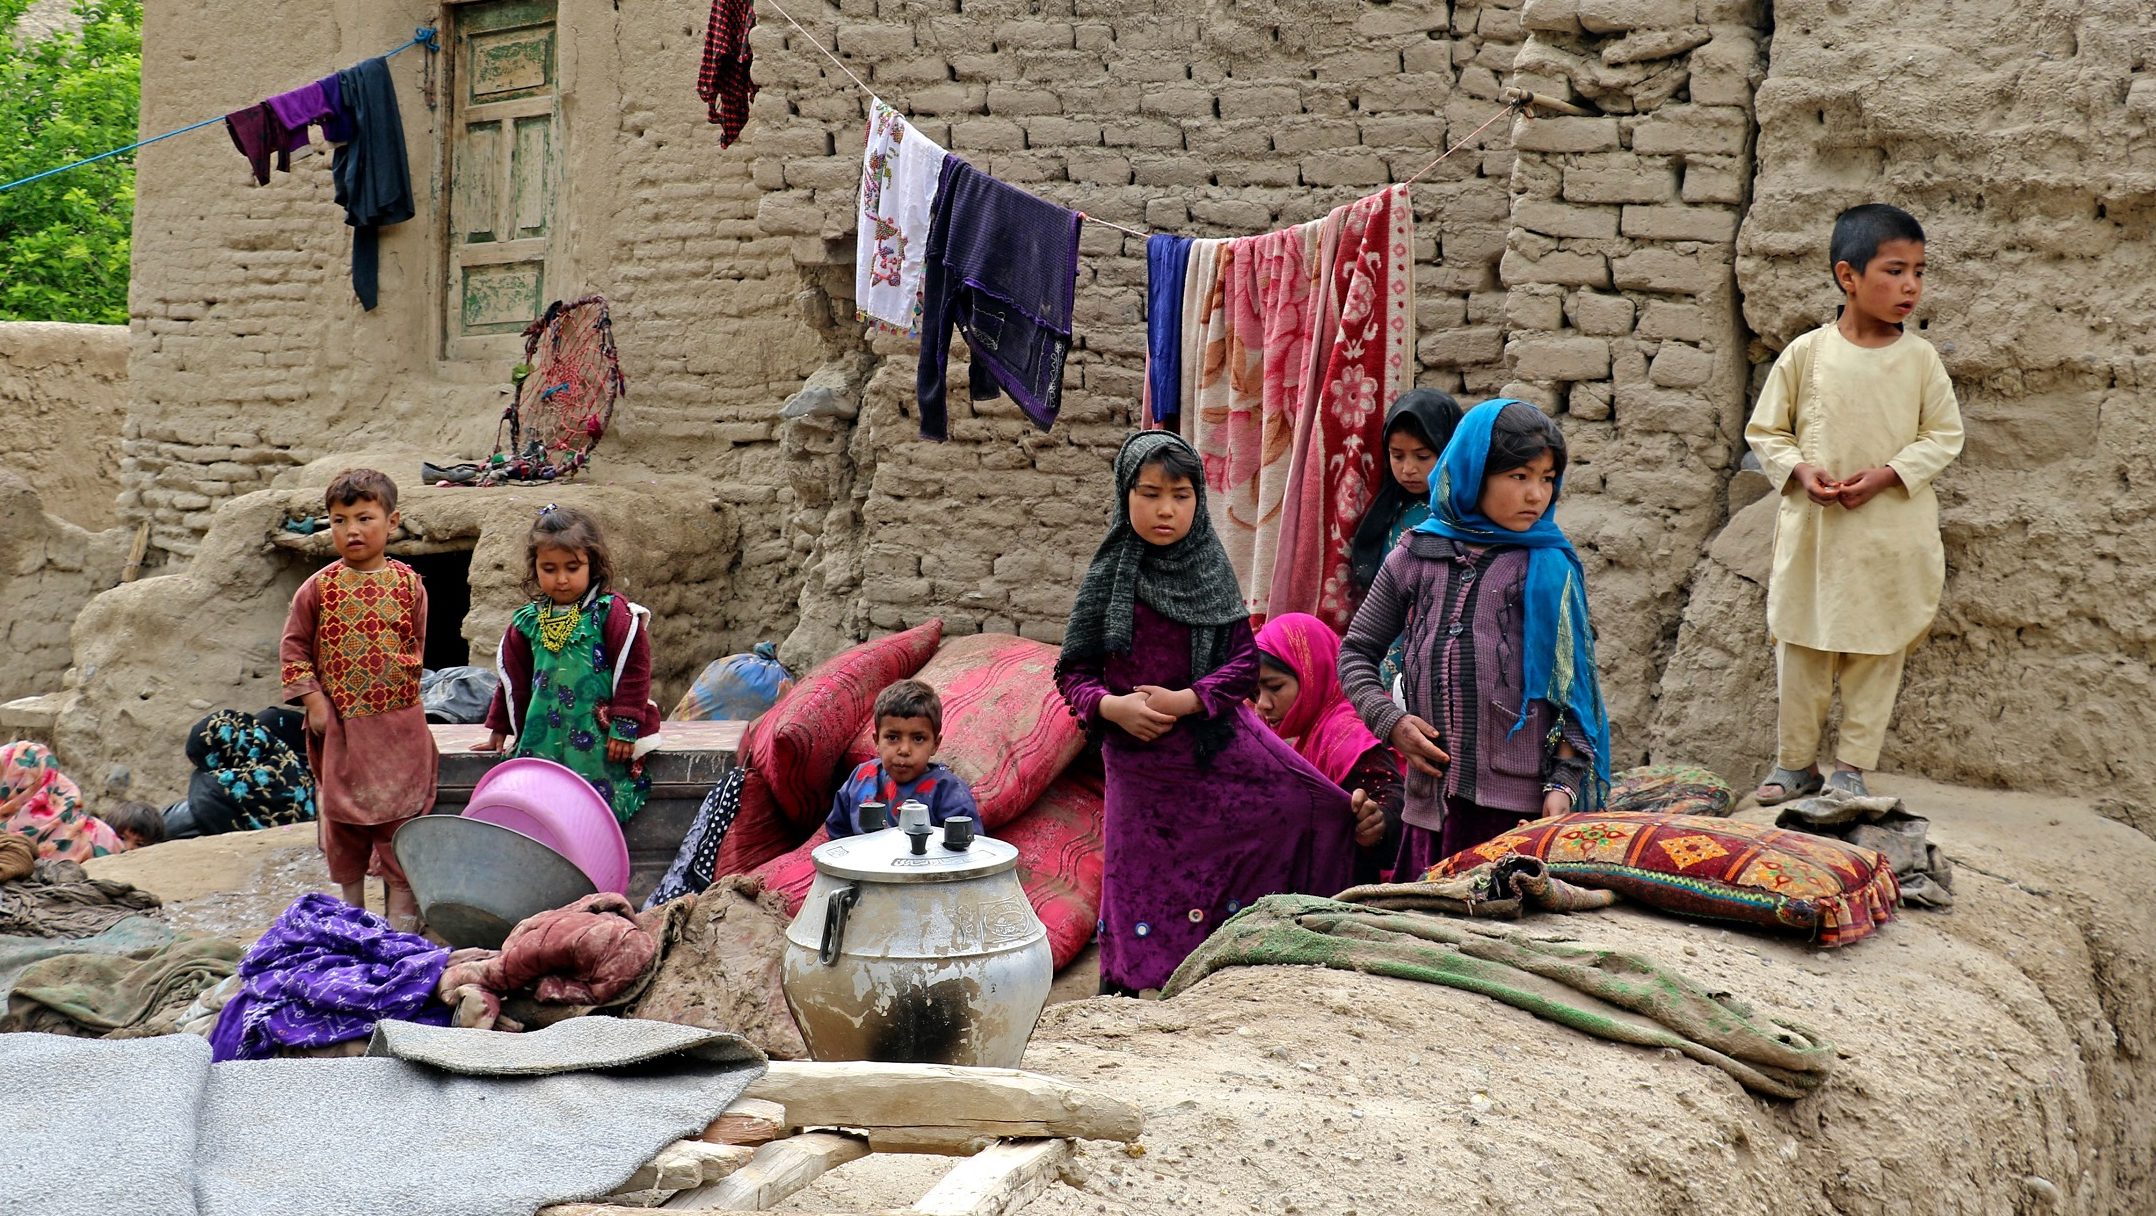 22 People Dead, 300 Homes Destroyed in Afghanistan Floods